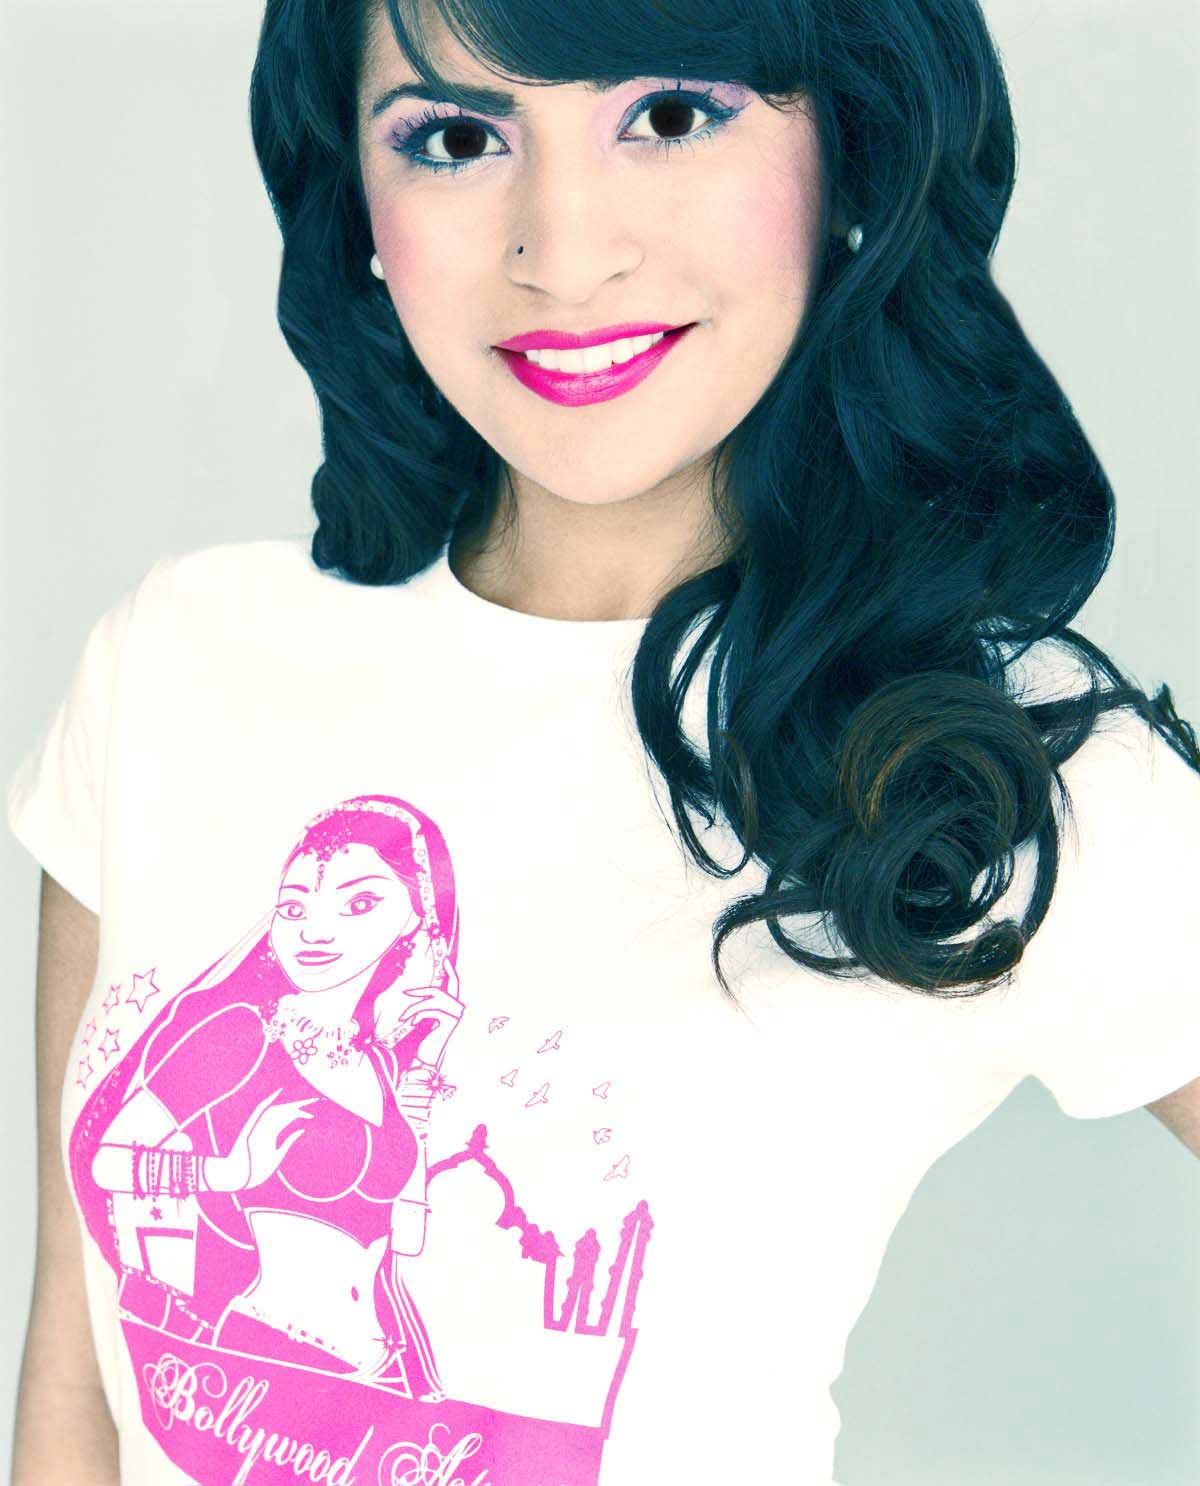 Desi female model wearing Bollywood Actress Illustration t.shirt.